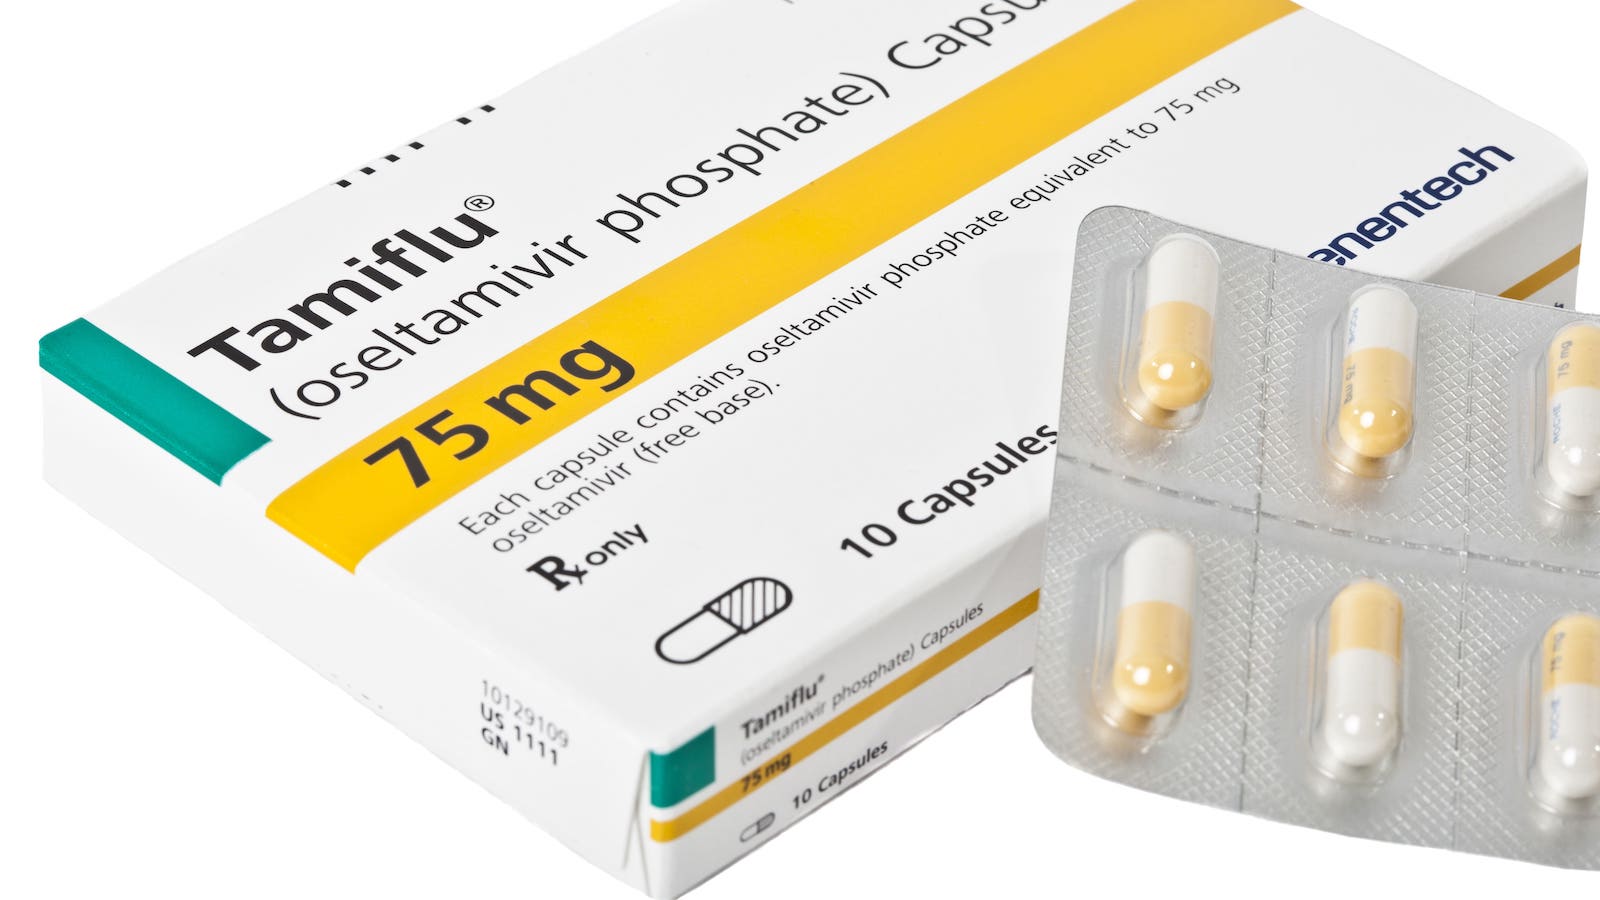 Serious Concerns Surround Effectiveness of Tamiflu